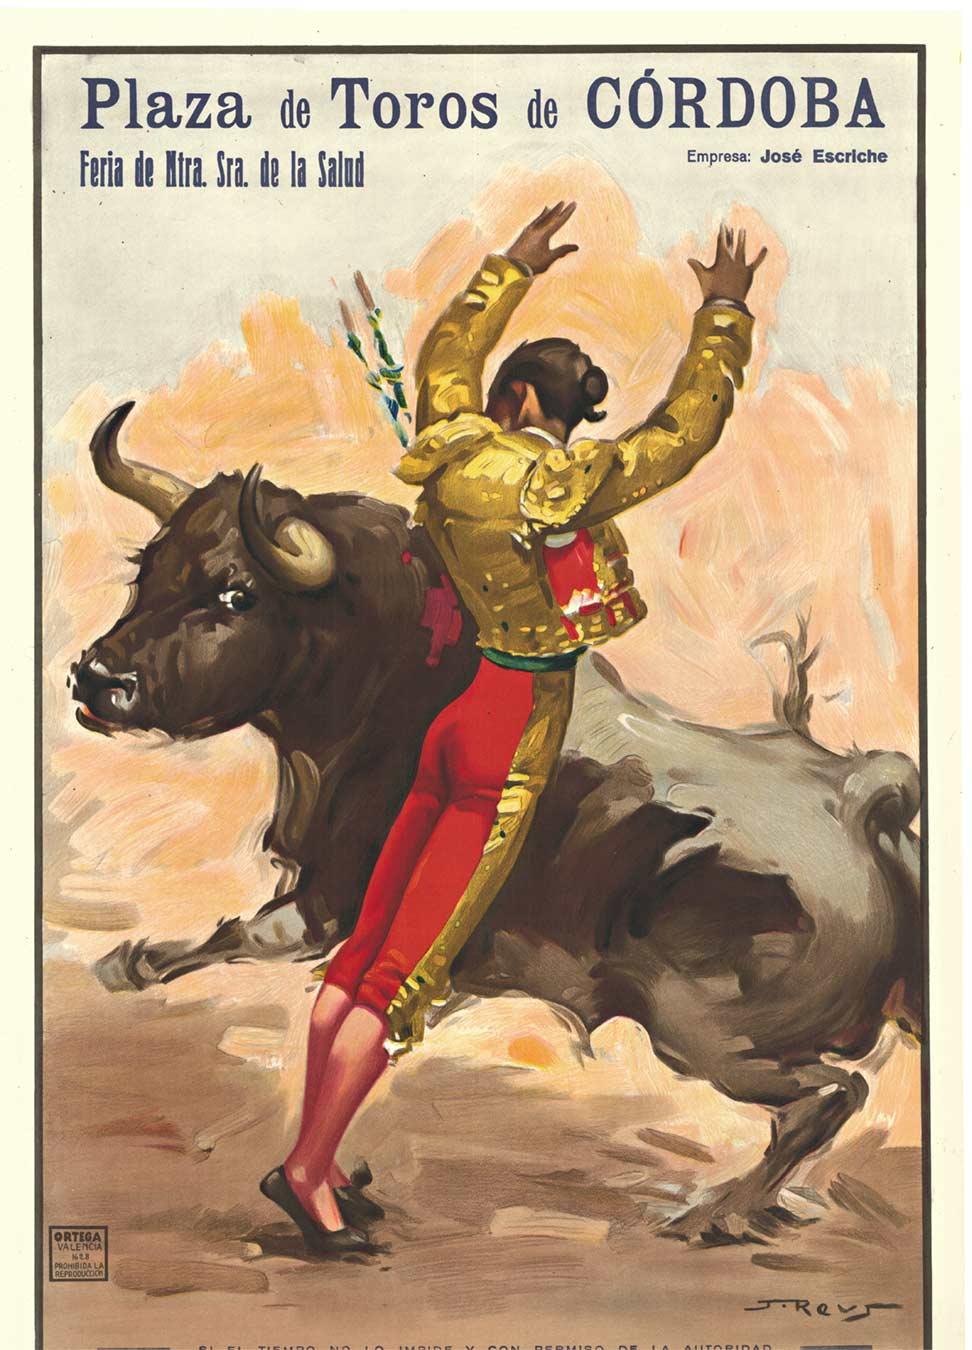 Original  Plaza de Toros de Cordoba 1941 vintage bull fighting poster - Print by Juan Reus